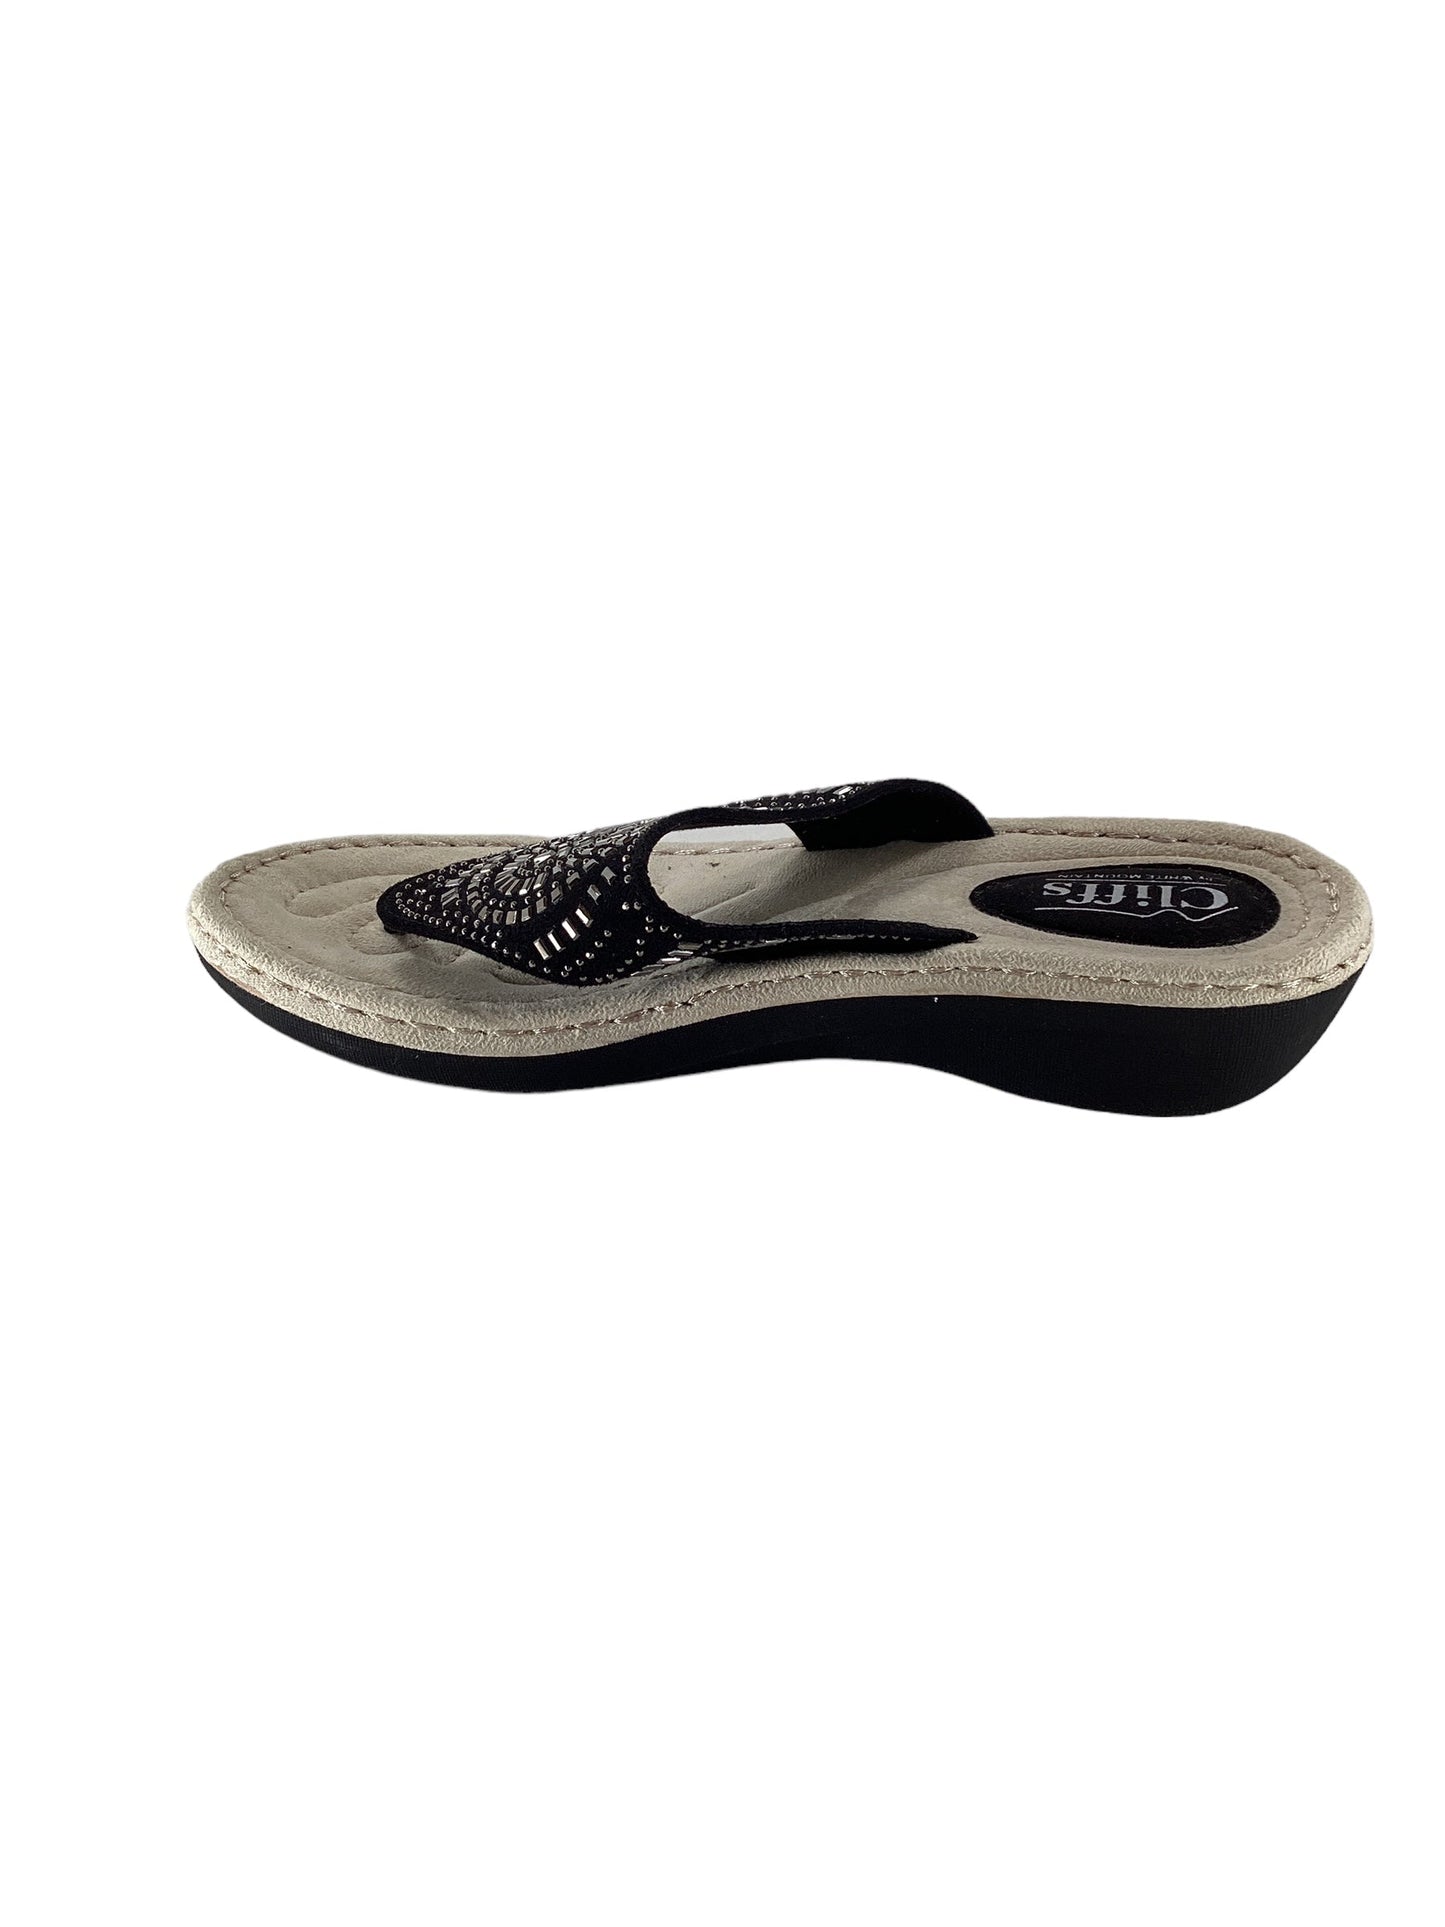 Black Sandals Heels Wedge White Mountain, Size 8.5